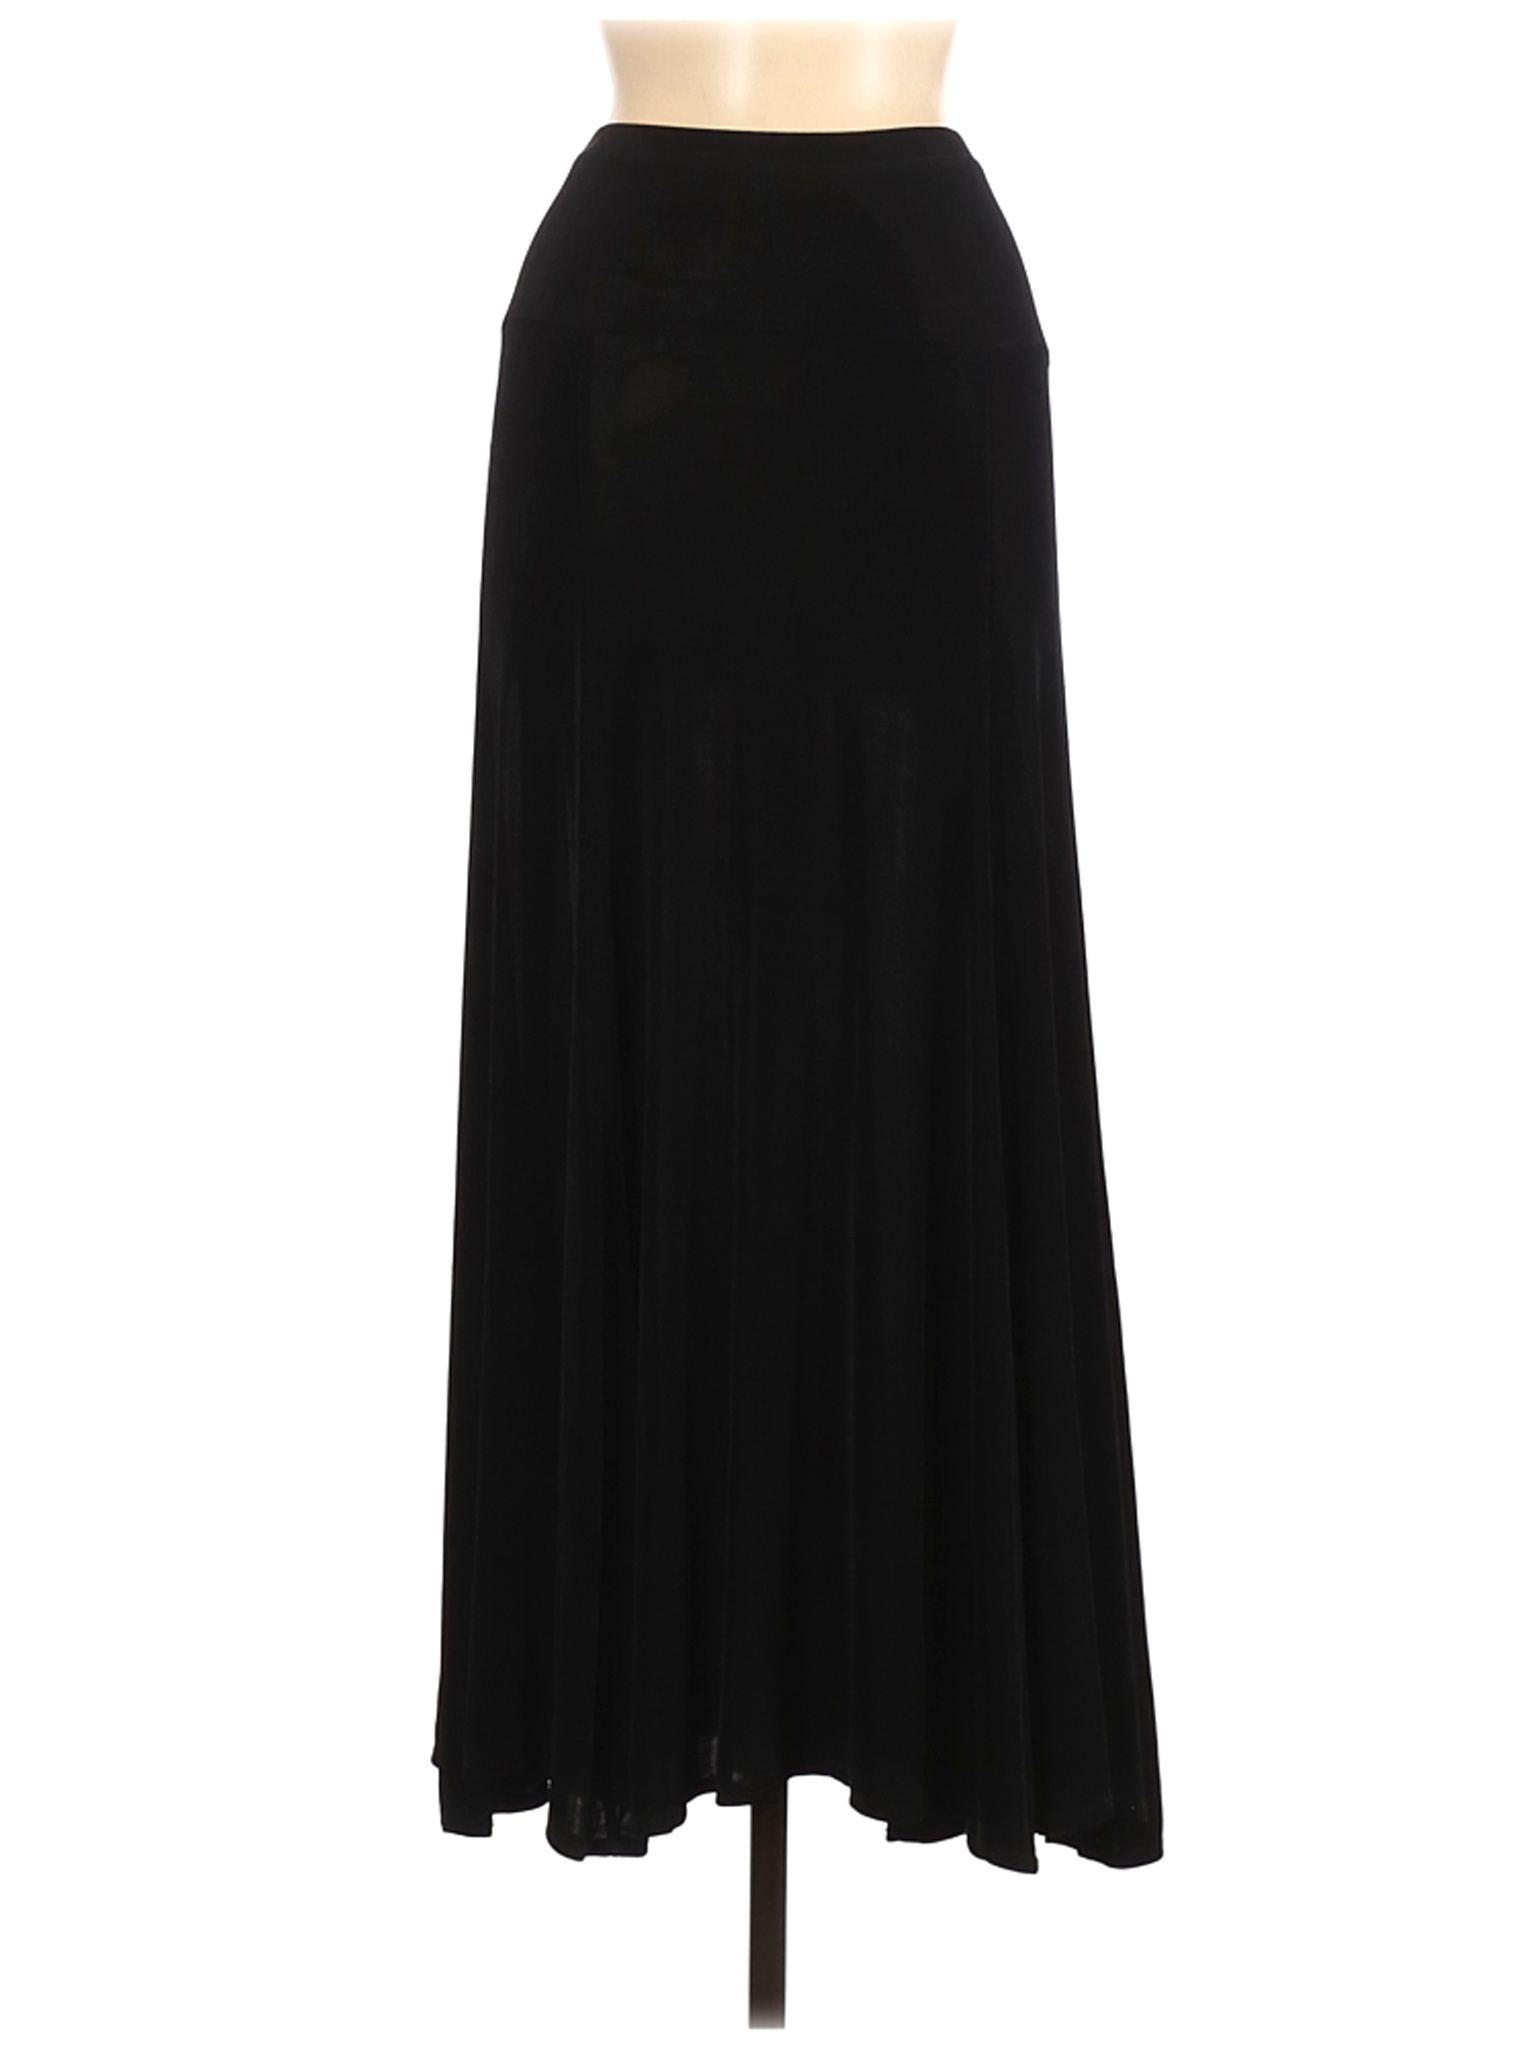 Coldwater Creek Women Black Casual Skirt M | eBay